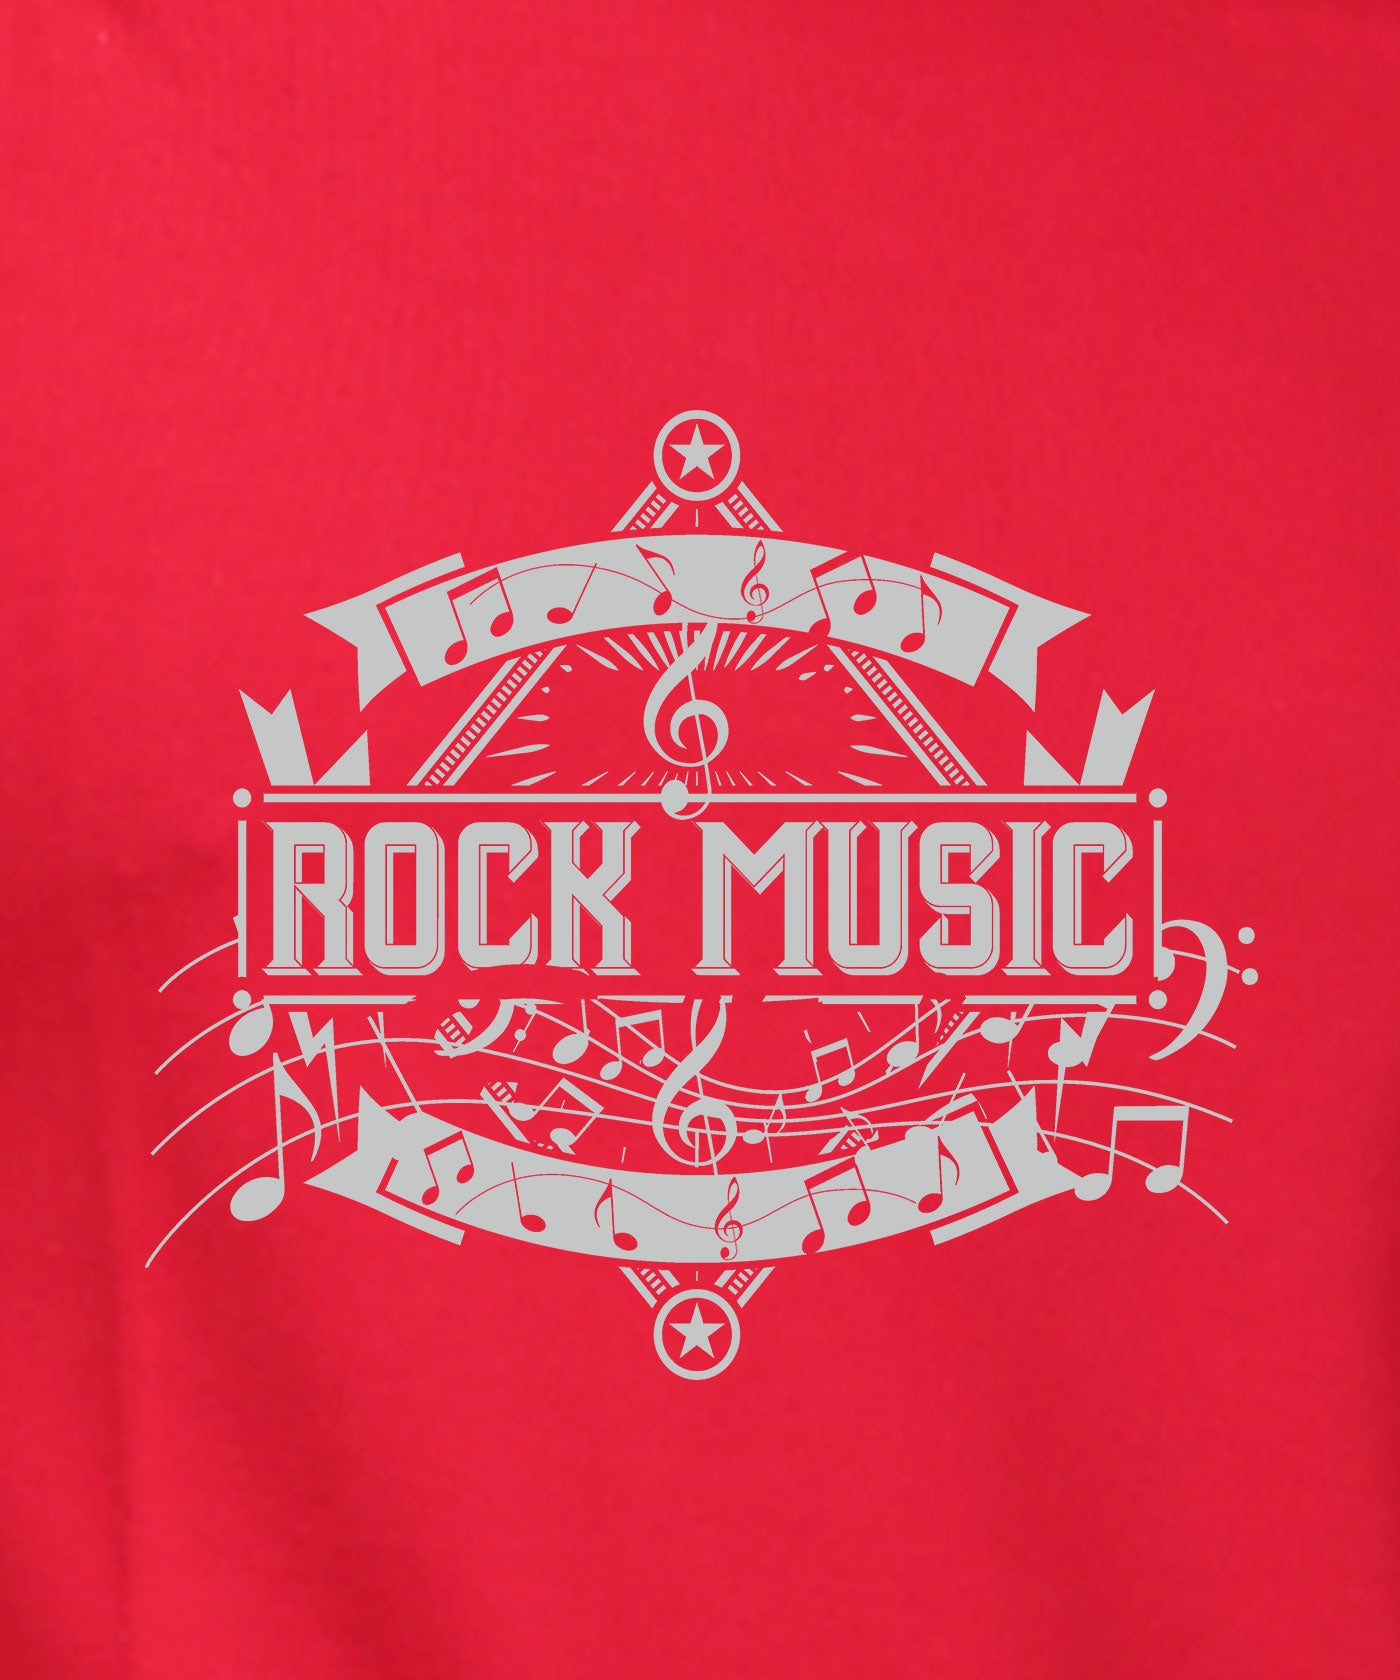 Rock Music - Premium Round Neck Cotton Tees for Men - Red